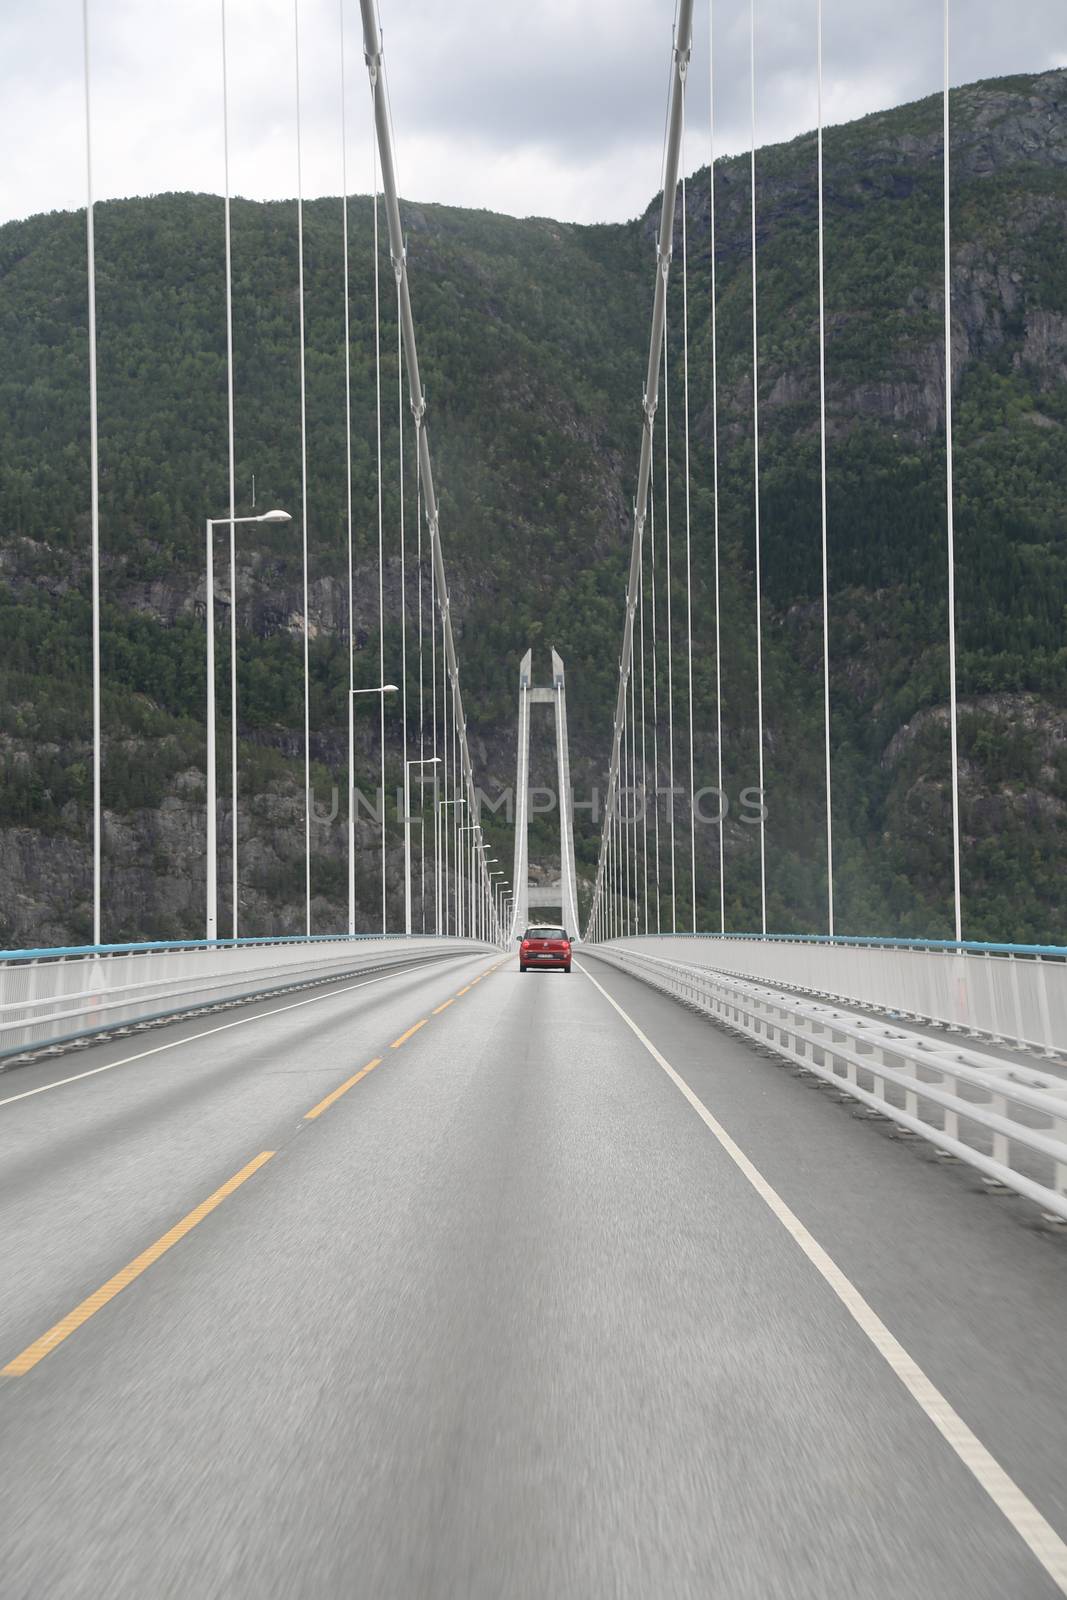 The suspension bridge over the Hardanger fjord